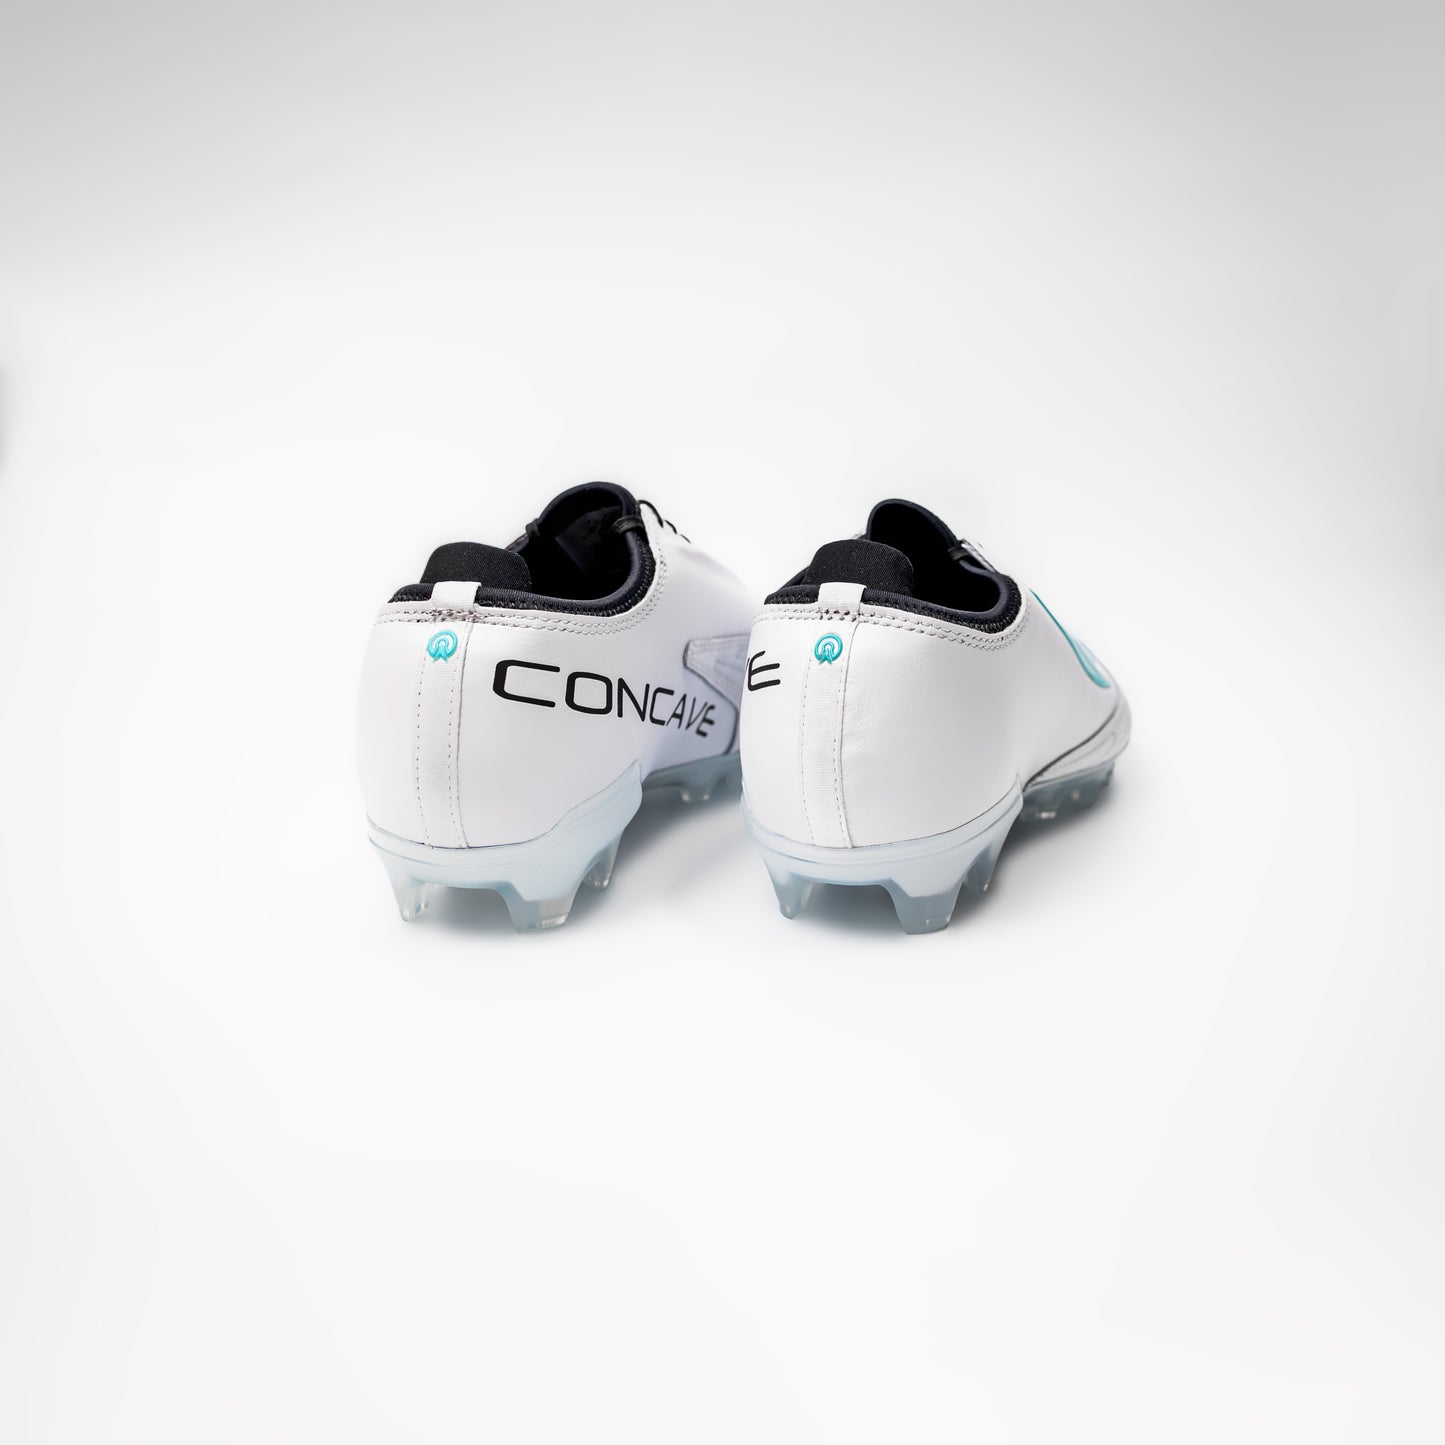 Concave Halo + Pro v2 FG - White/Cyan/Black